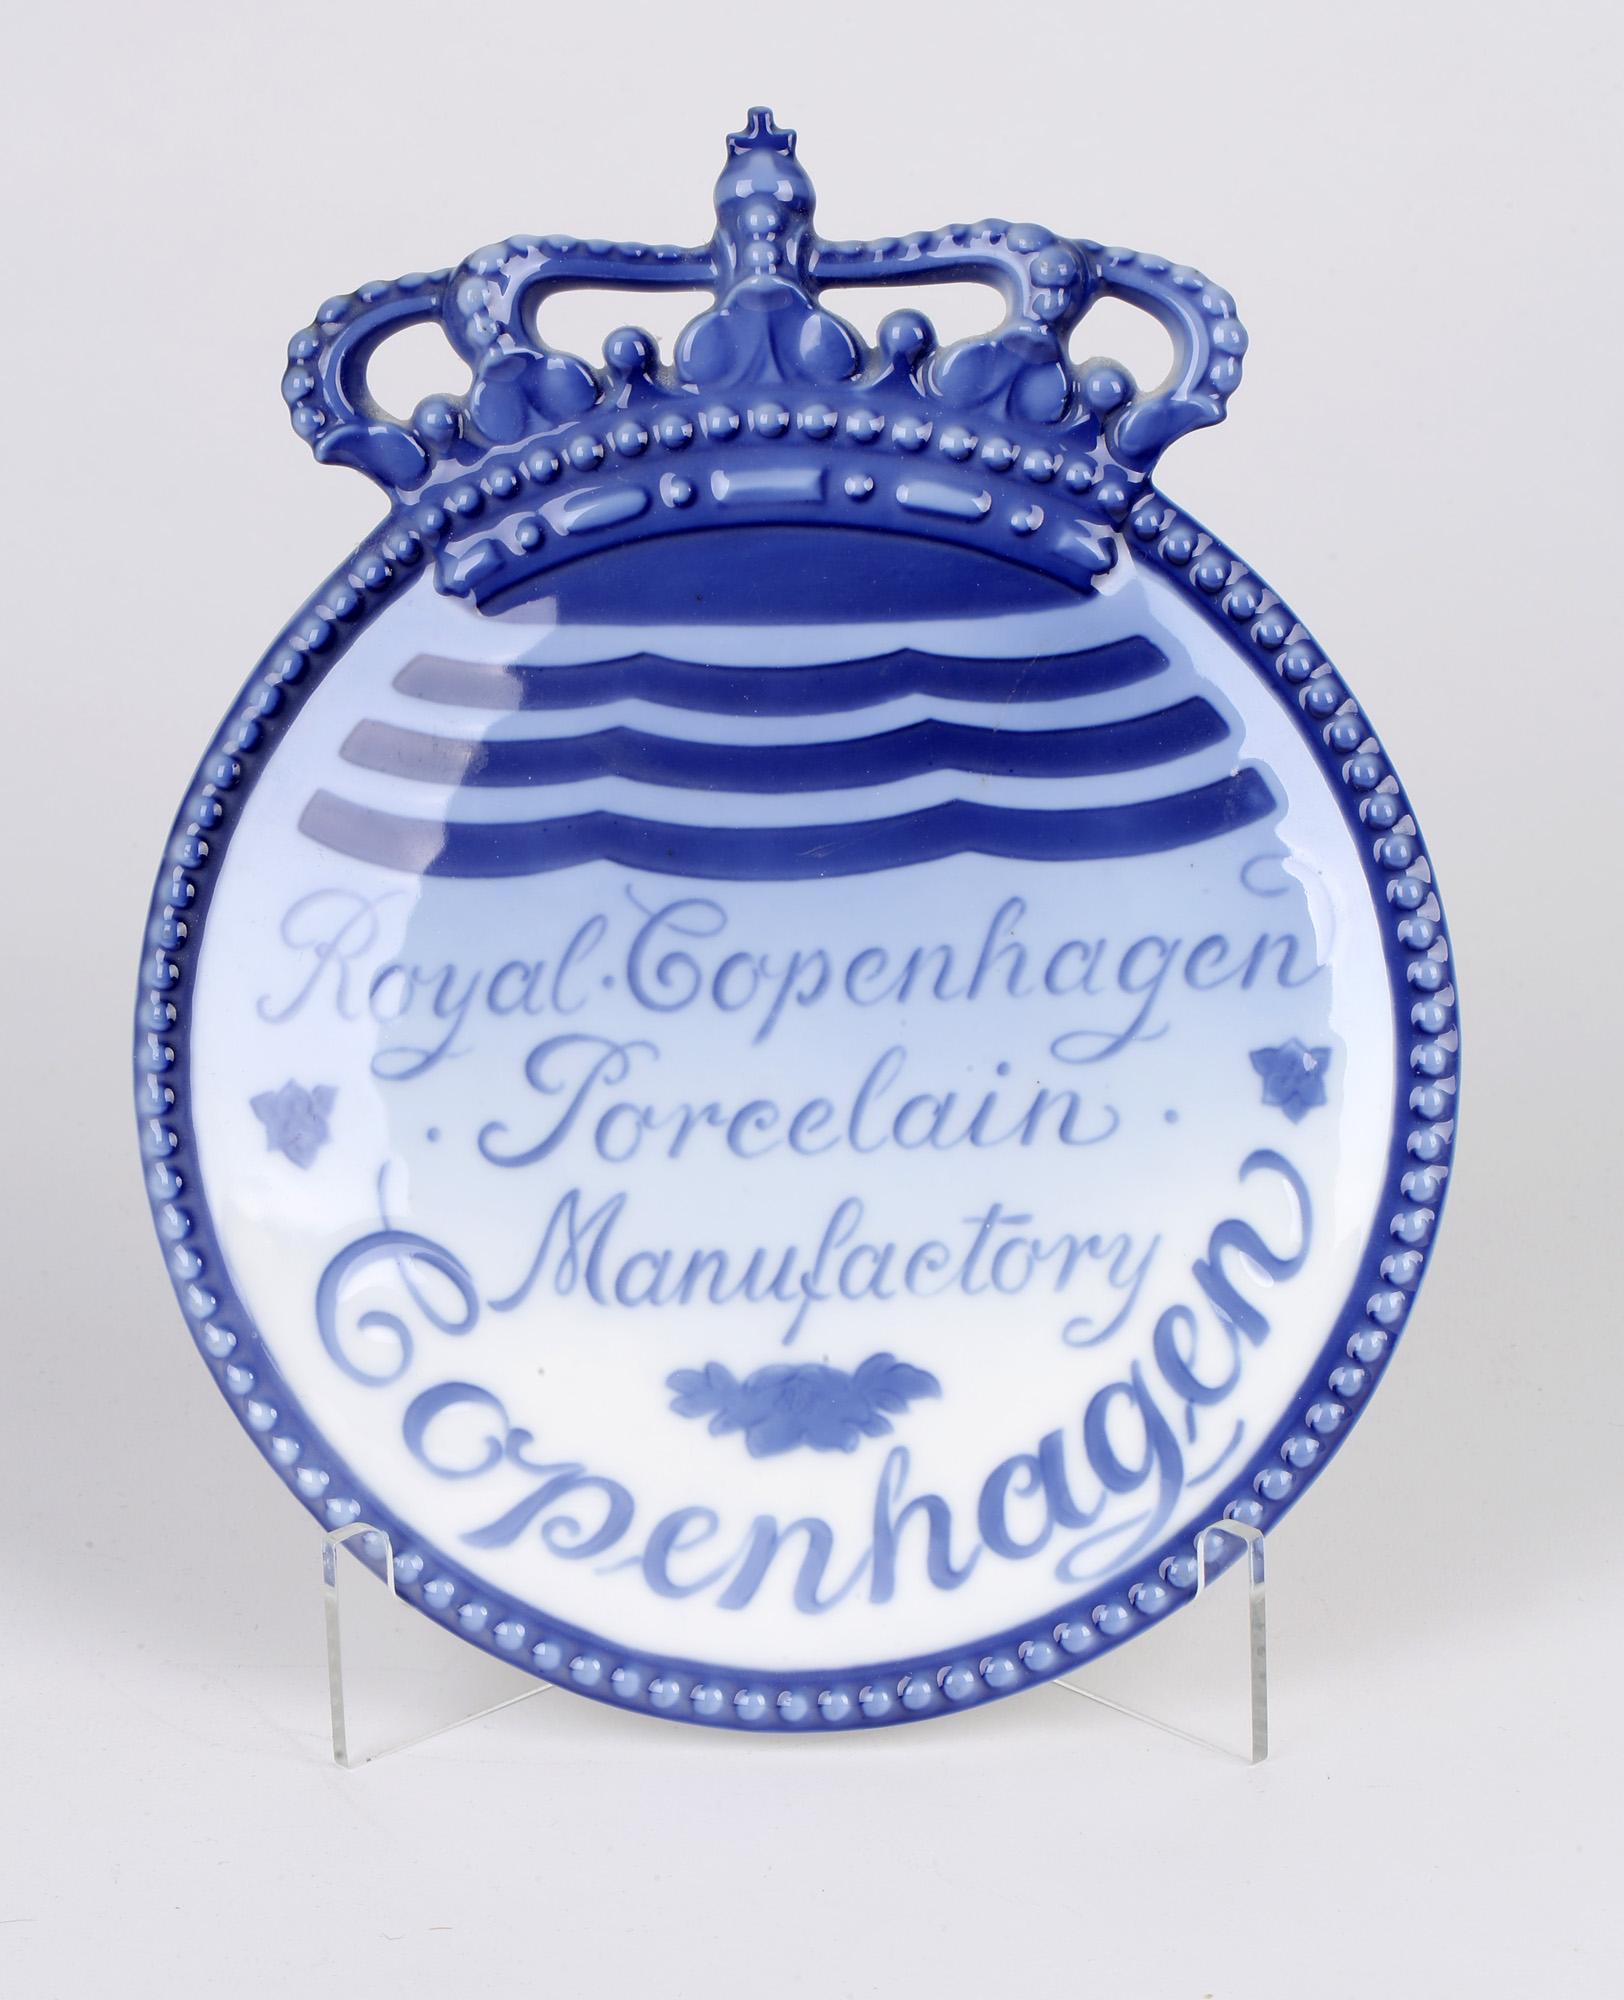 Early 20th Century Royal Copenhagen Porcelain Manufactory Advertising Plaque